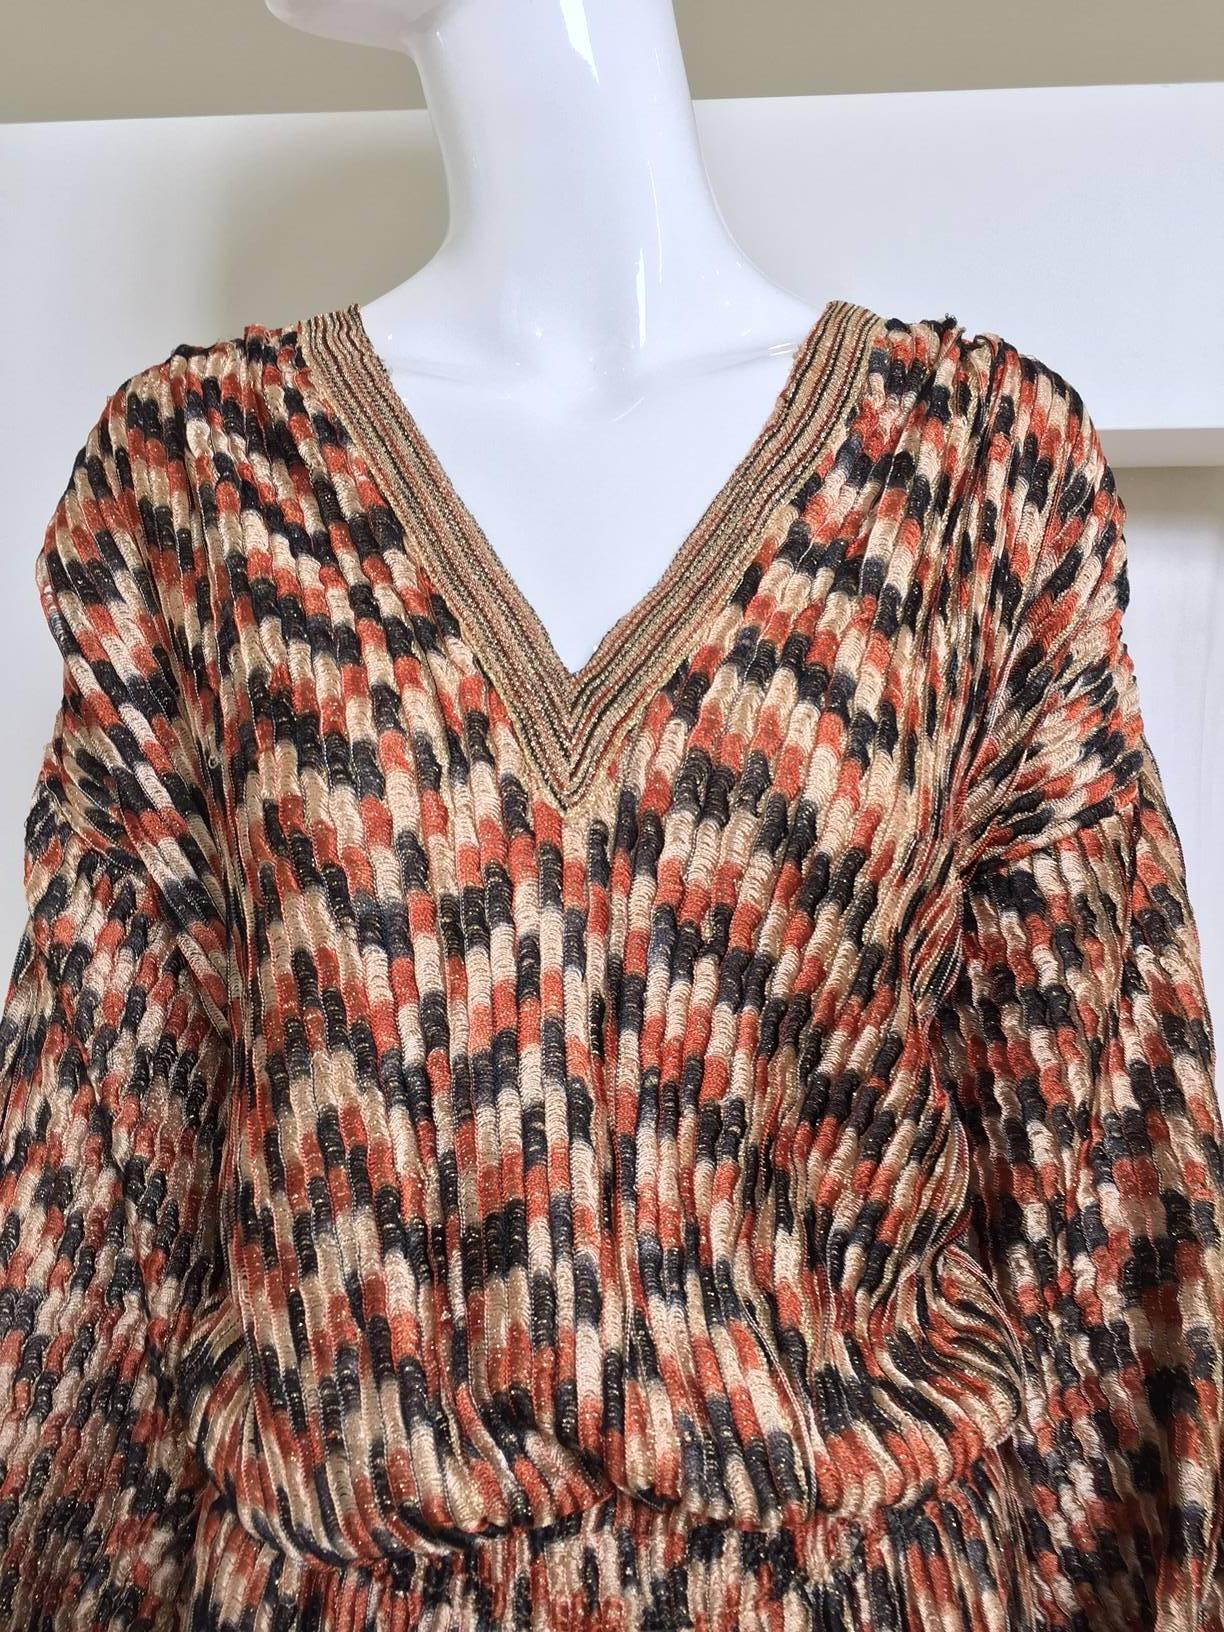 1980s Missoni brown, black and metallic V neck knit dress.
Bust: 42